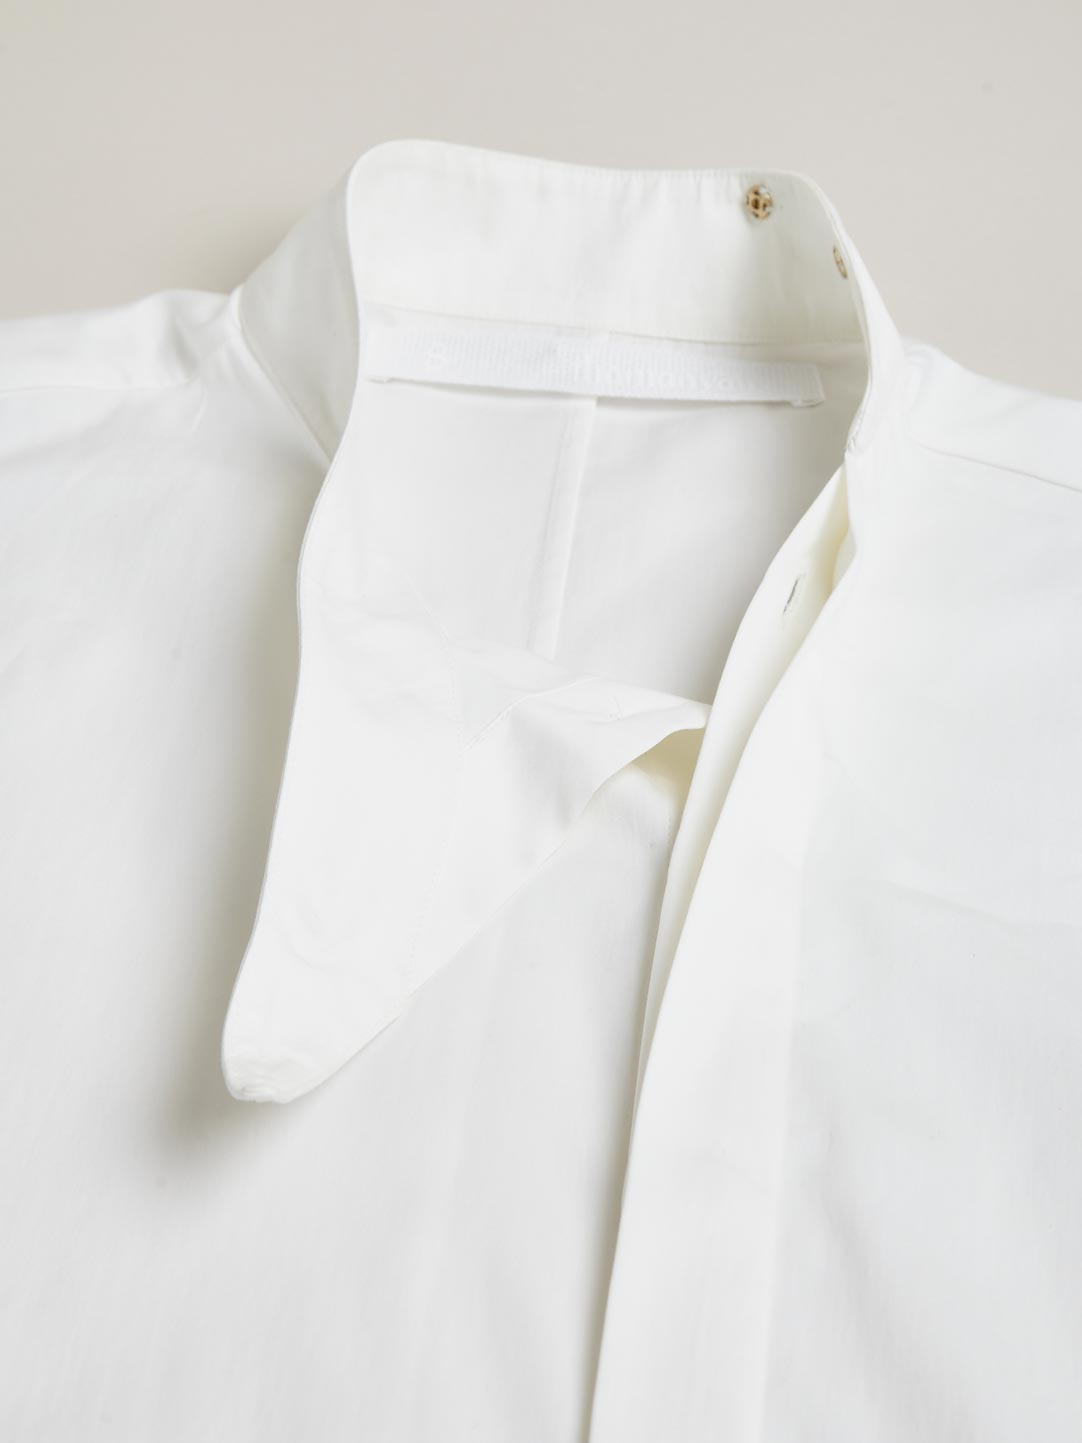 Lyst - Thamanyah Dervish Collar Short Sleeve Shirt in White for Men